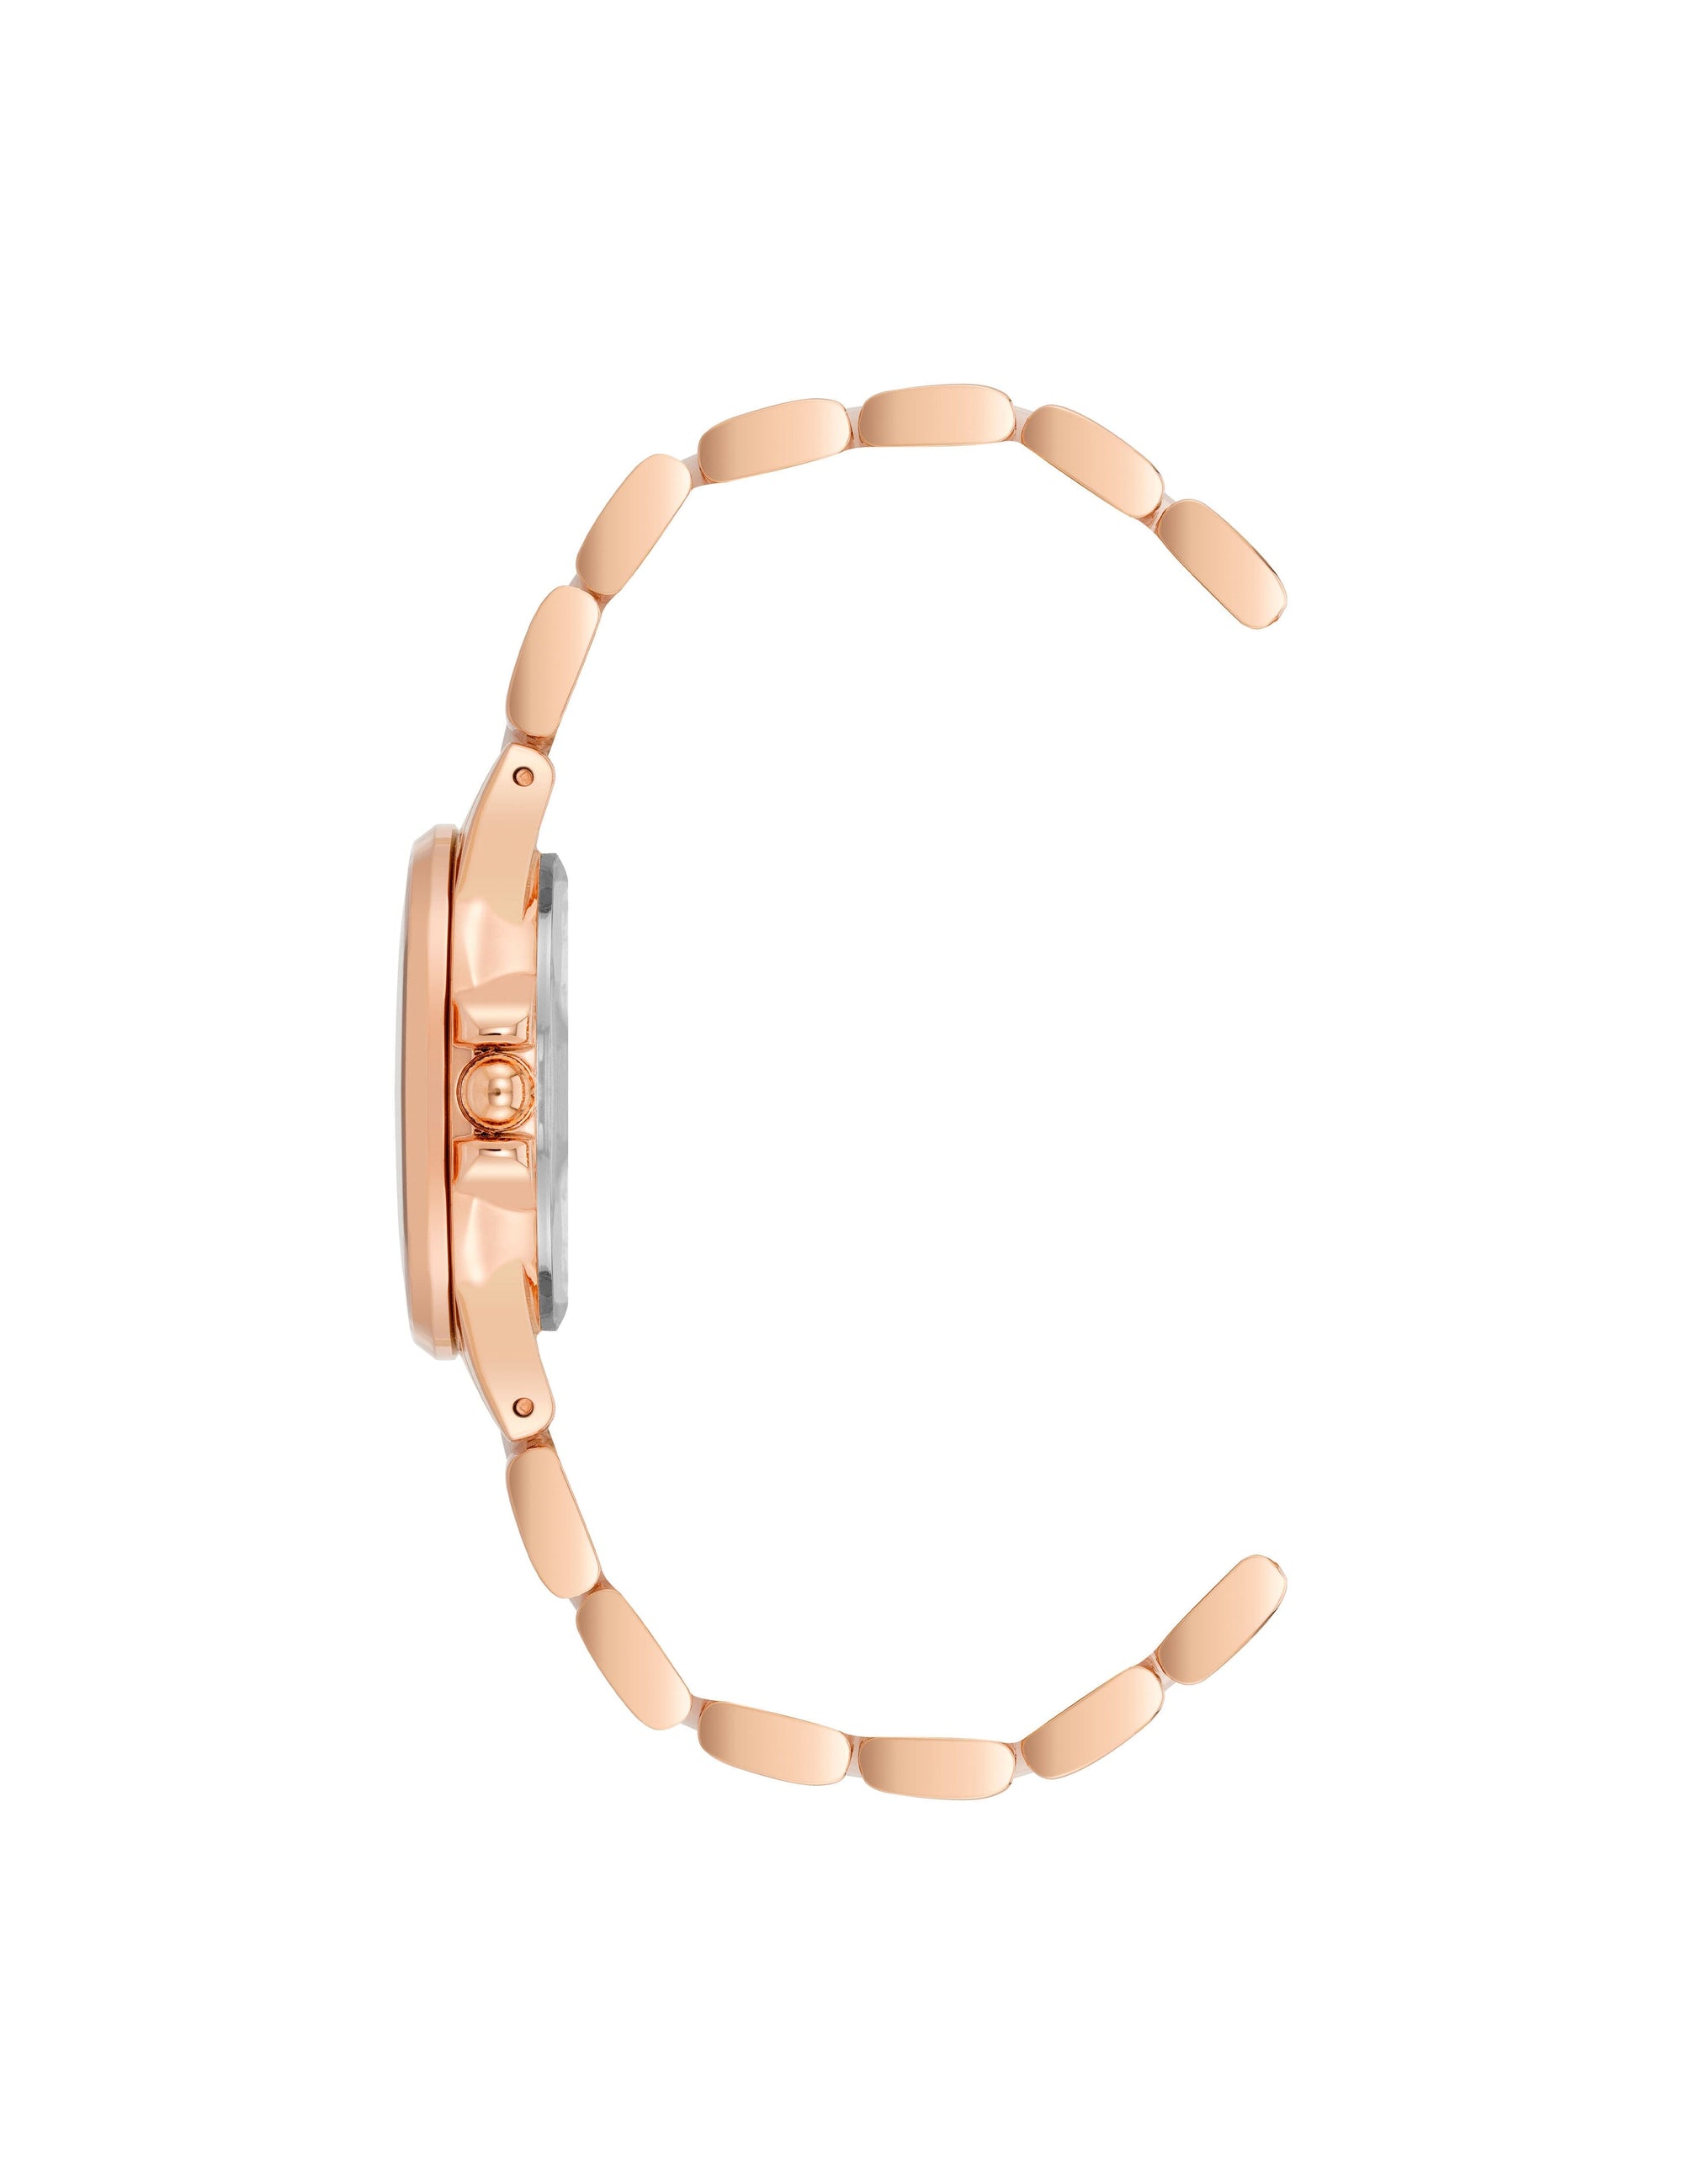 Anne Klein Blush/Rose Gold-Tone Diamond Accented Ceramic Bracelet Watch